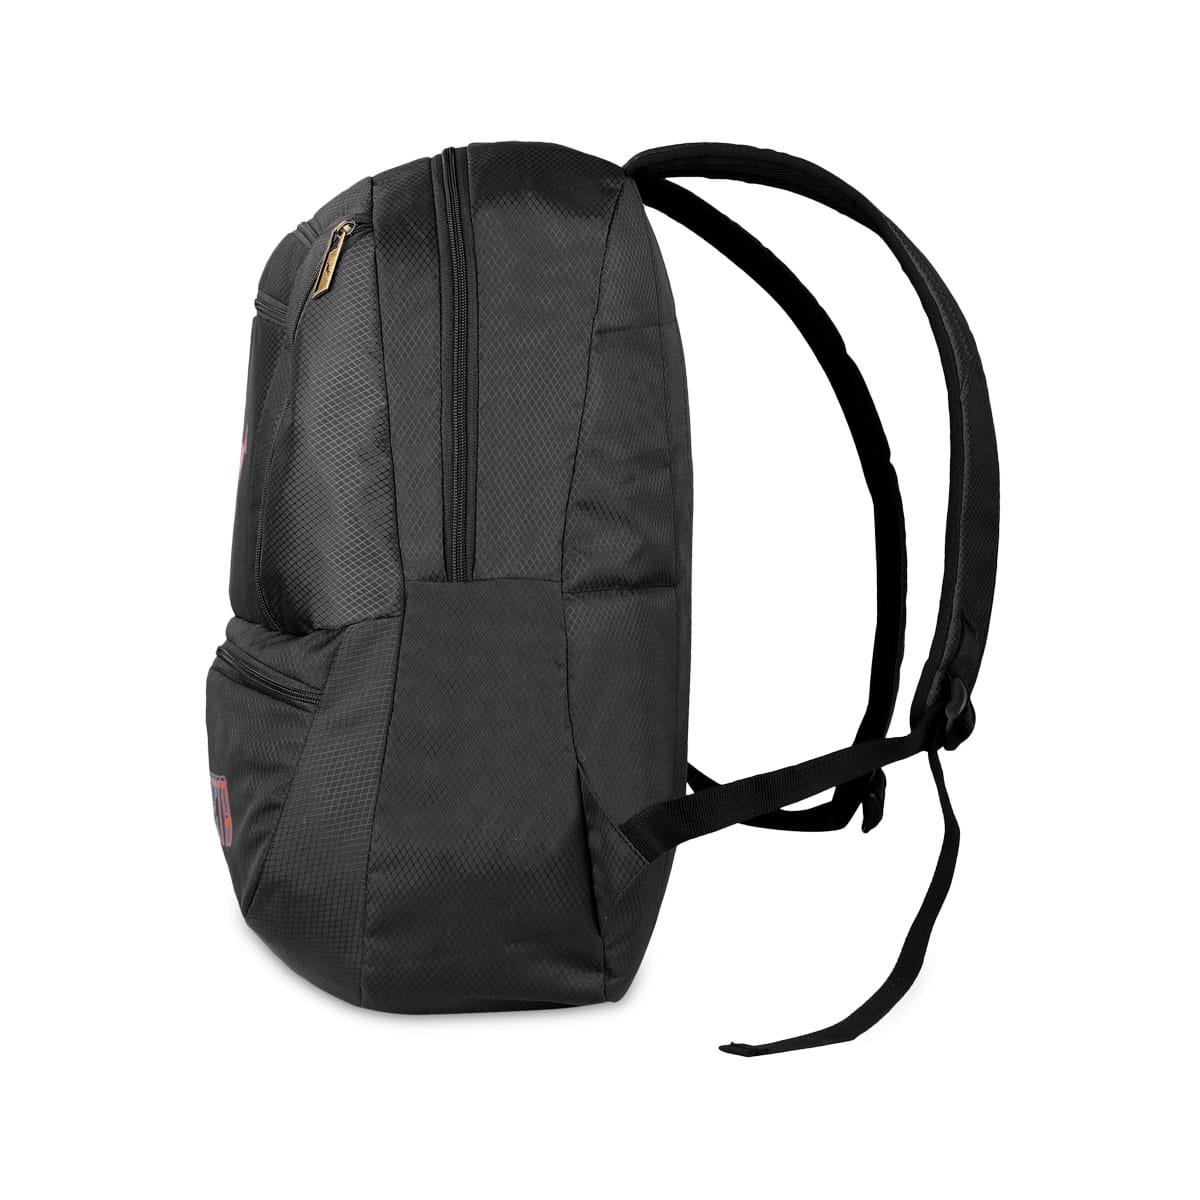 Black | Protecta Paragon Laptop Backpack-Main